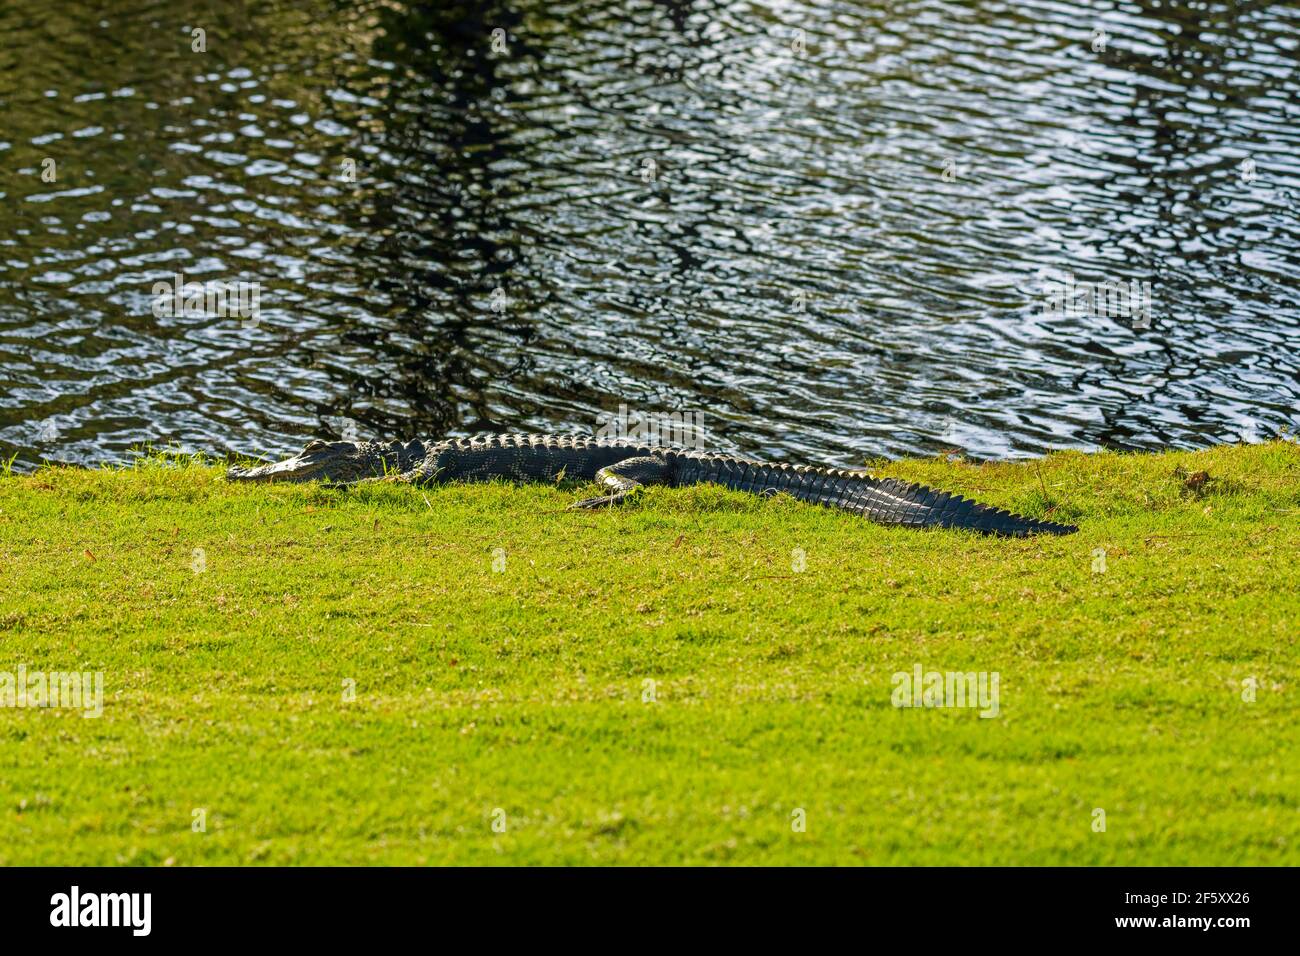 An American alligator, Alligator mississippiensis, sunning itself beside a pond Stock Photo